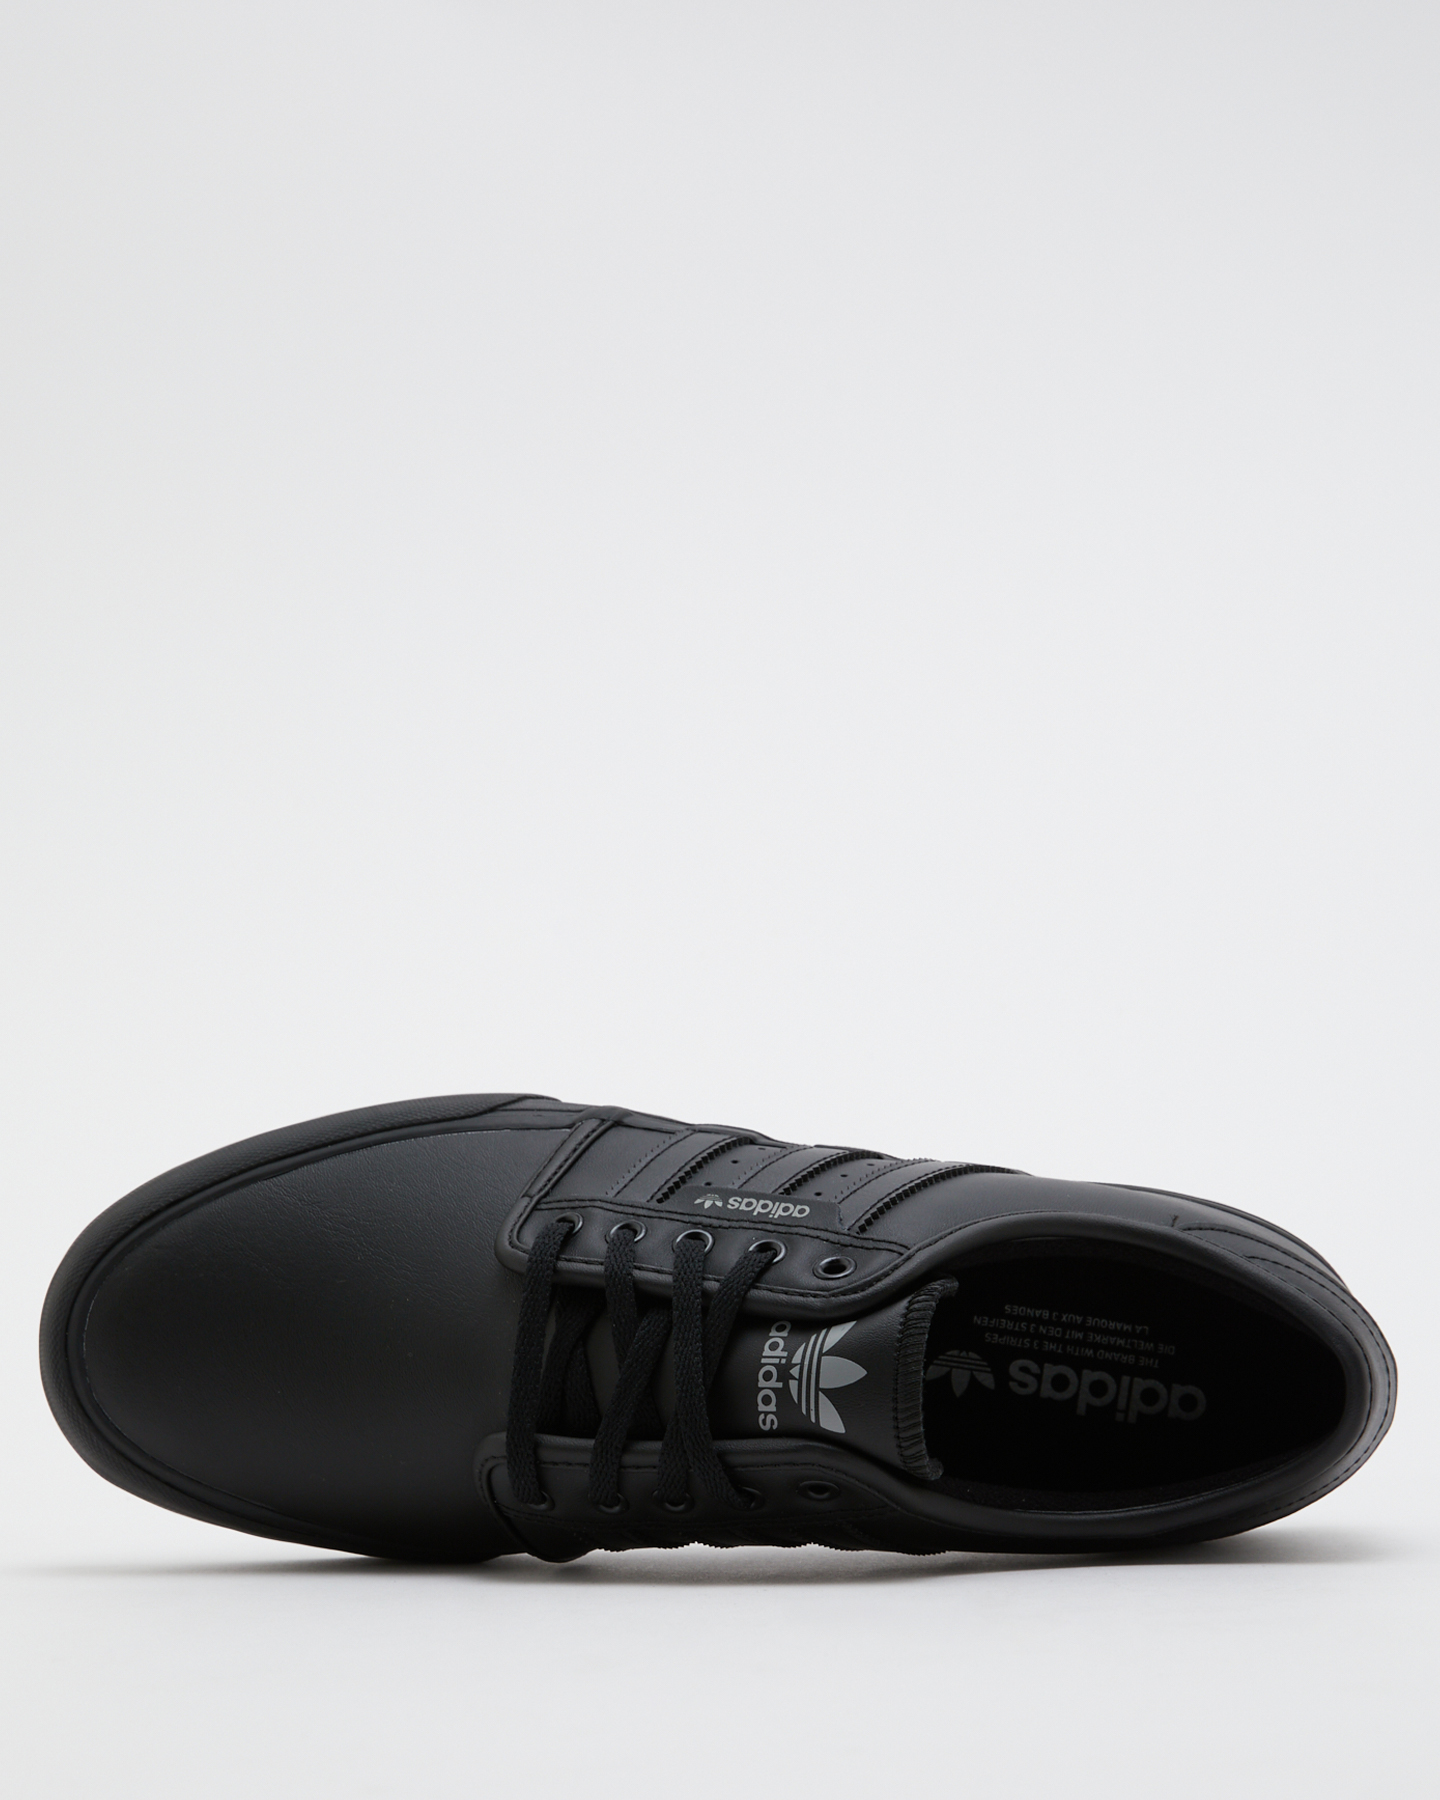 Adidas Mens Seeley Xt Leather Shoe - Black Black | SurfStitch